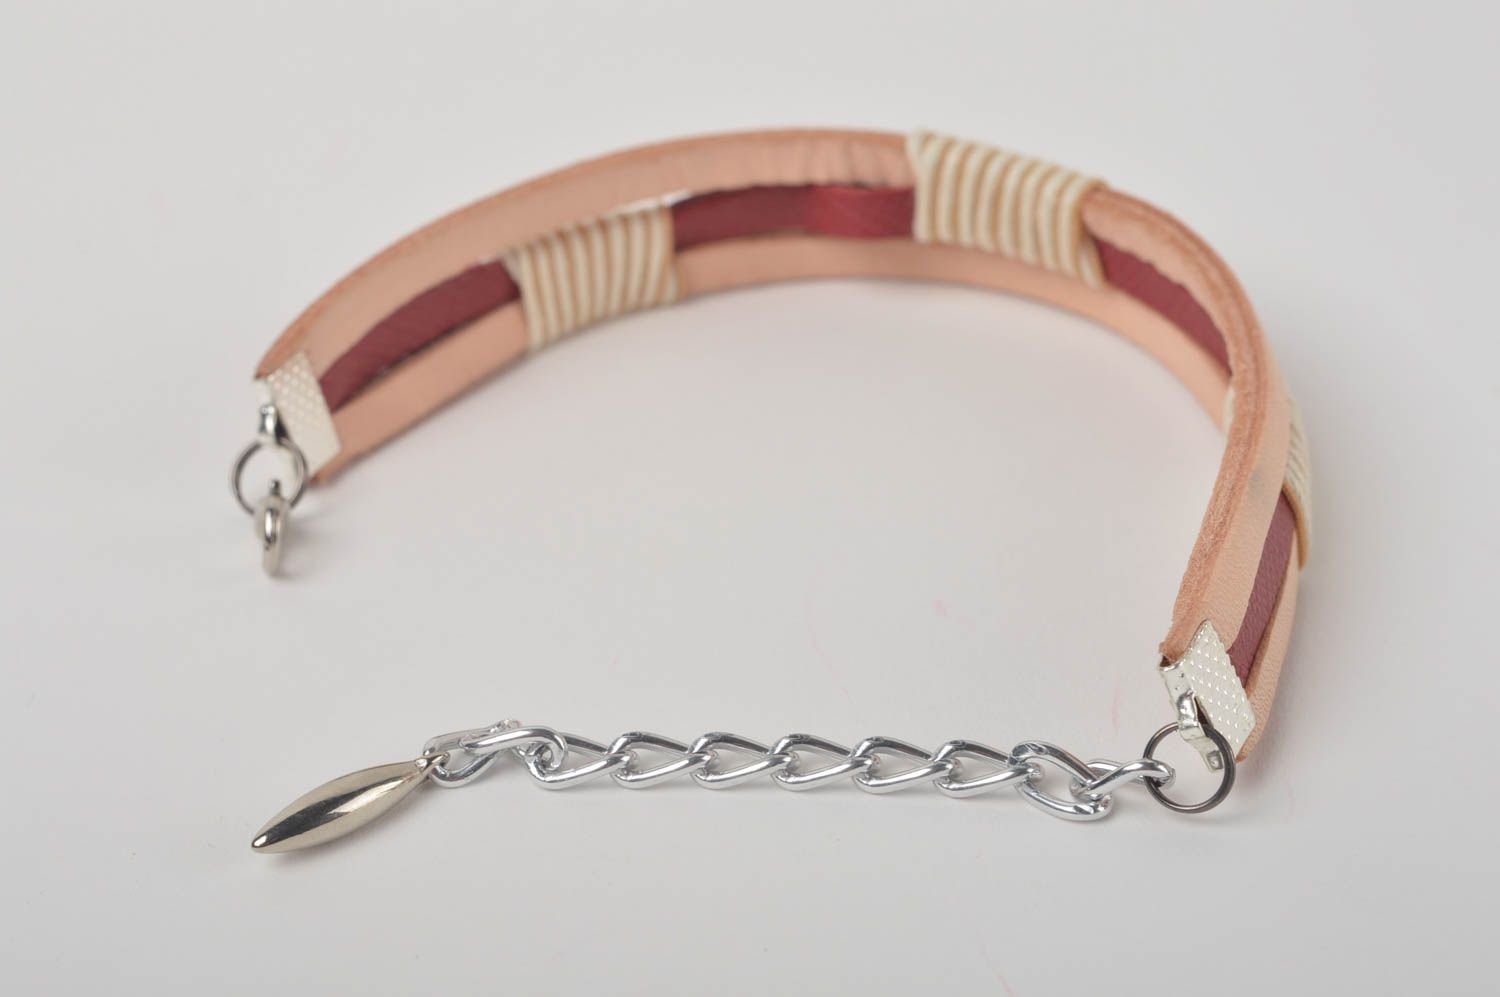 Unusual handmade leather wrist bracelet stylish bracelet designs gifts for her photo 5